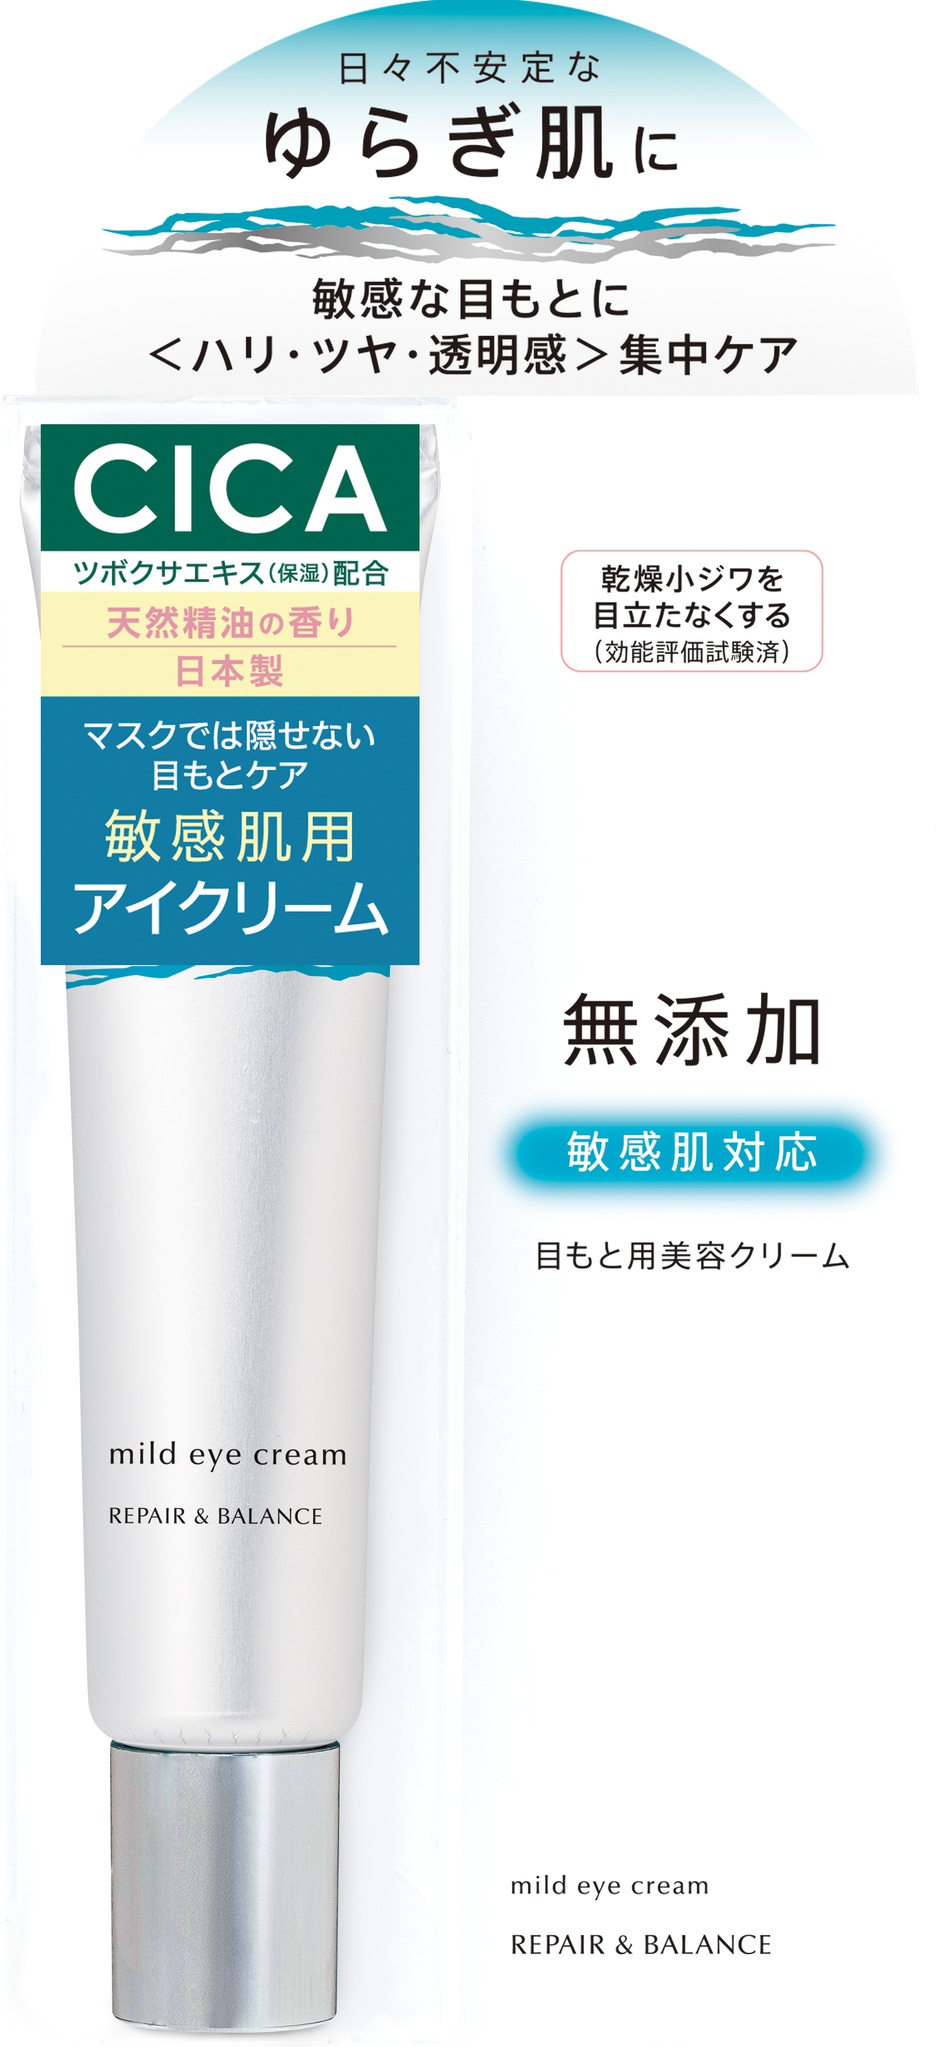 Meishoku Repair & Balance Cica Mild Eye Cream